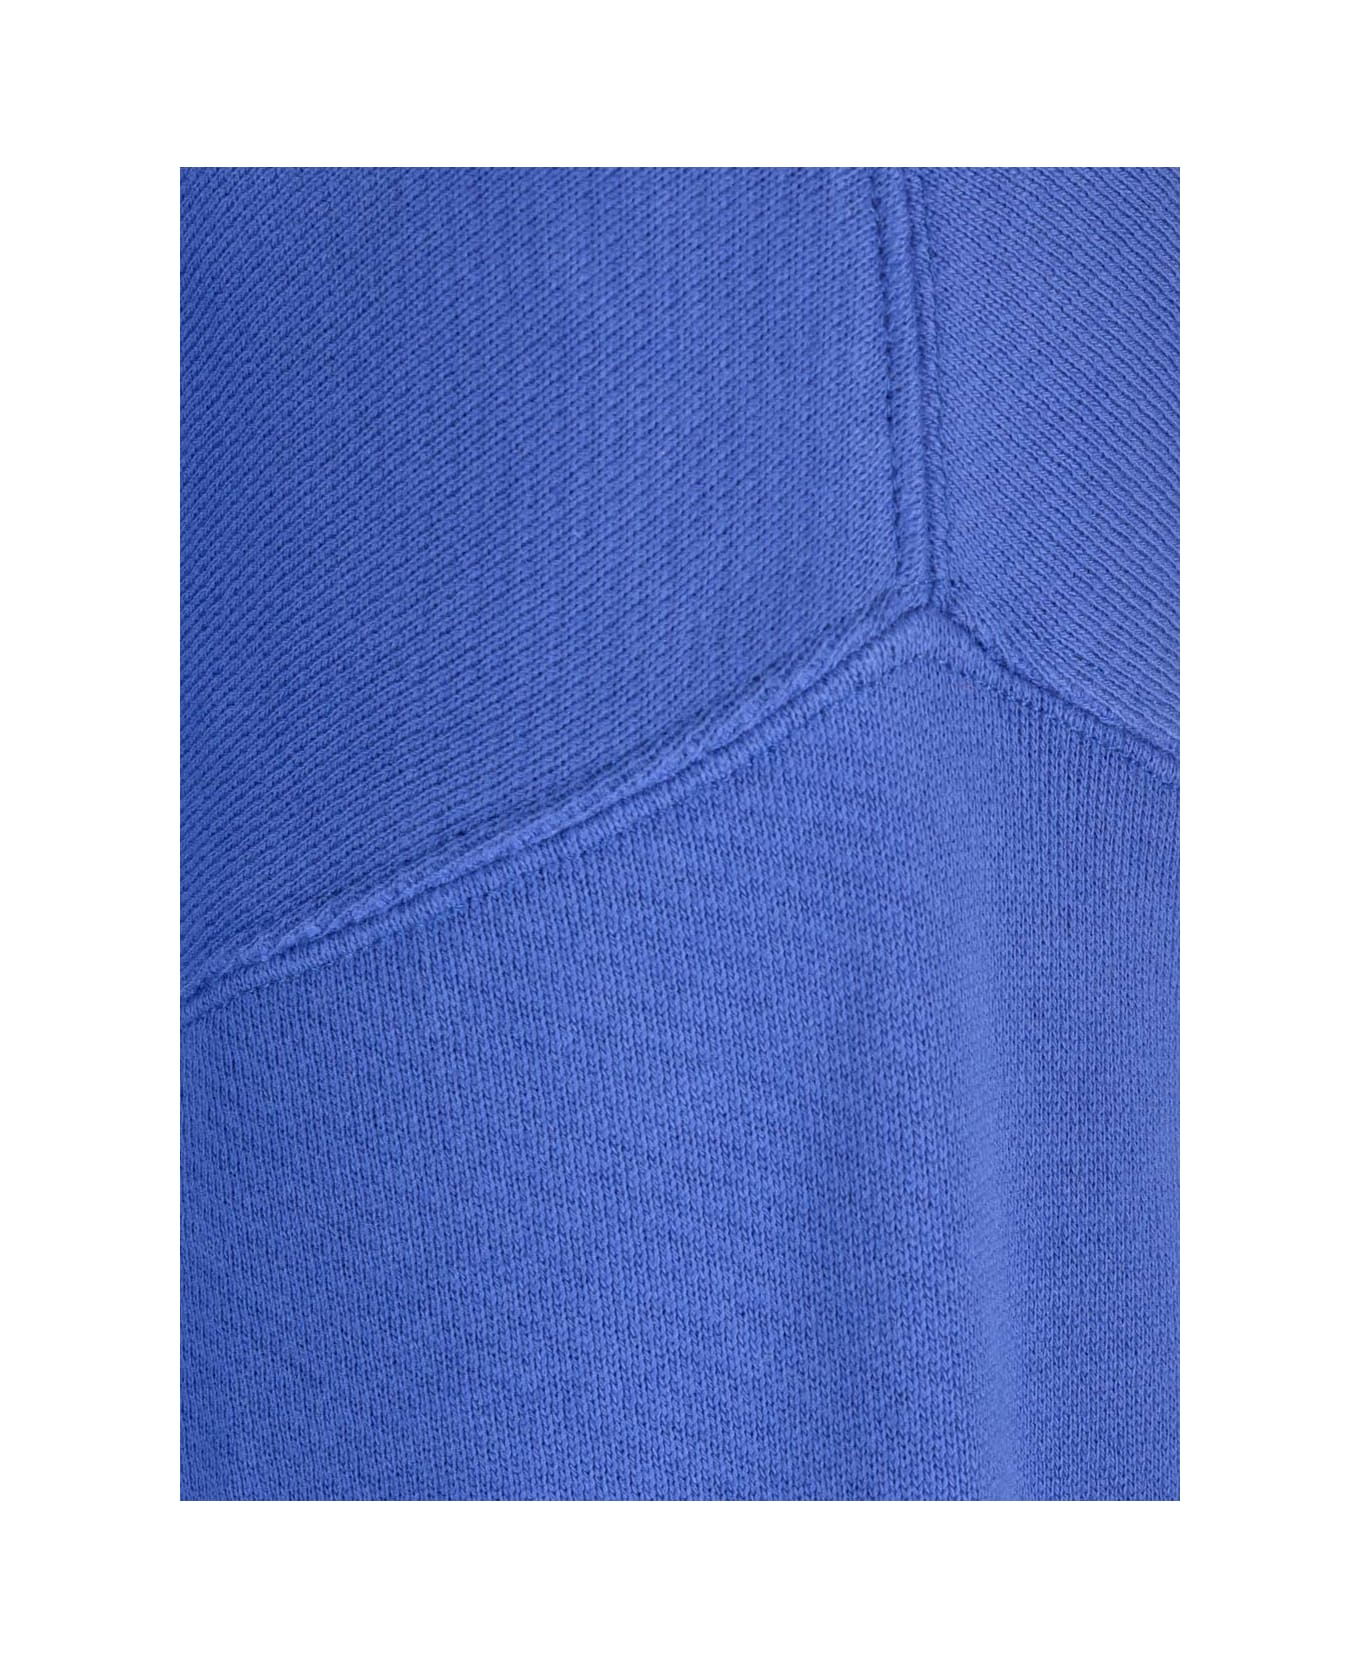 Off-White "off" Sweatshirt - Blue フリース